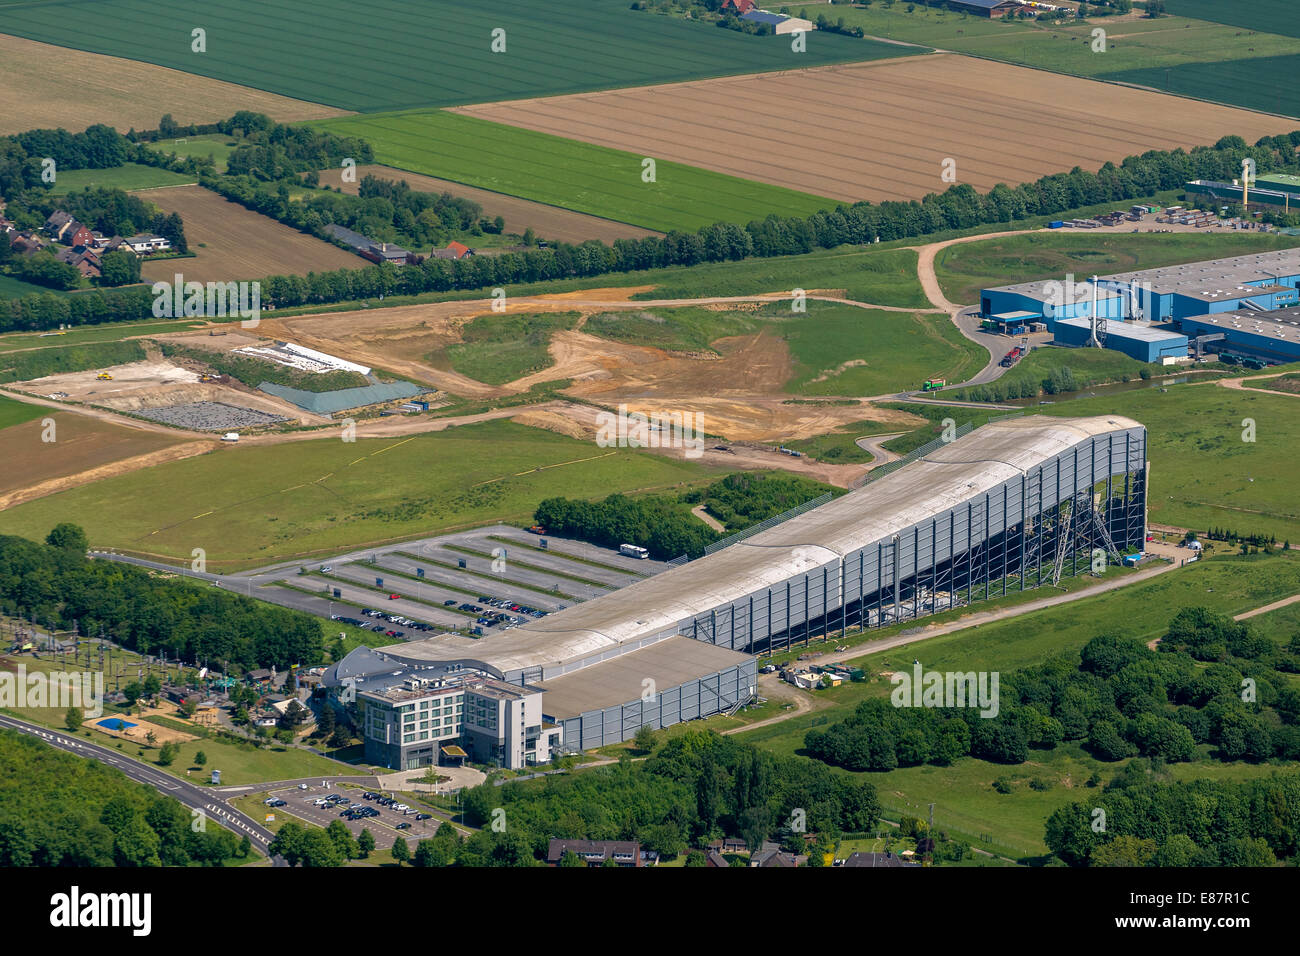 Aerial view, Skihalle Neuss indoor ski centre, Neuss, North Rhine-Westphalia, Germany Stock Photo